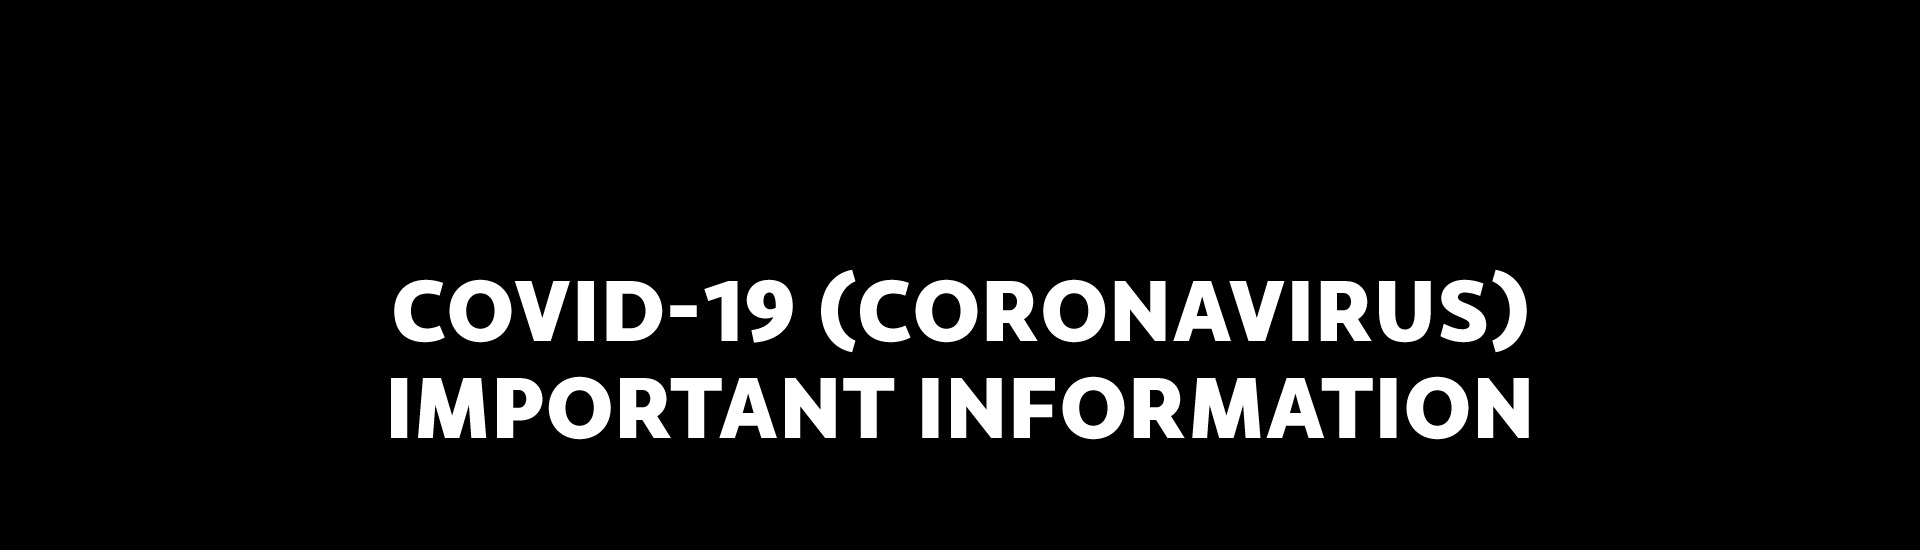 COVID19 Coronavirus Imporant Information | Brisbane Racing Club 